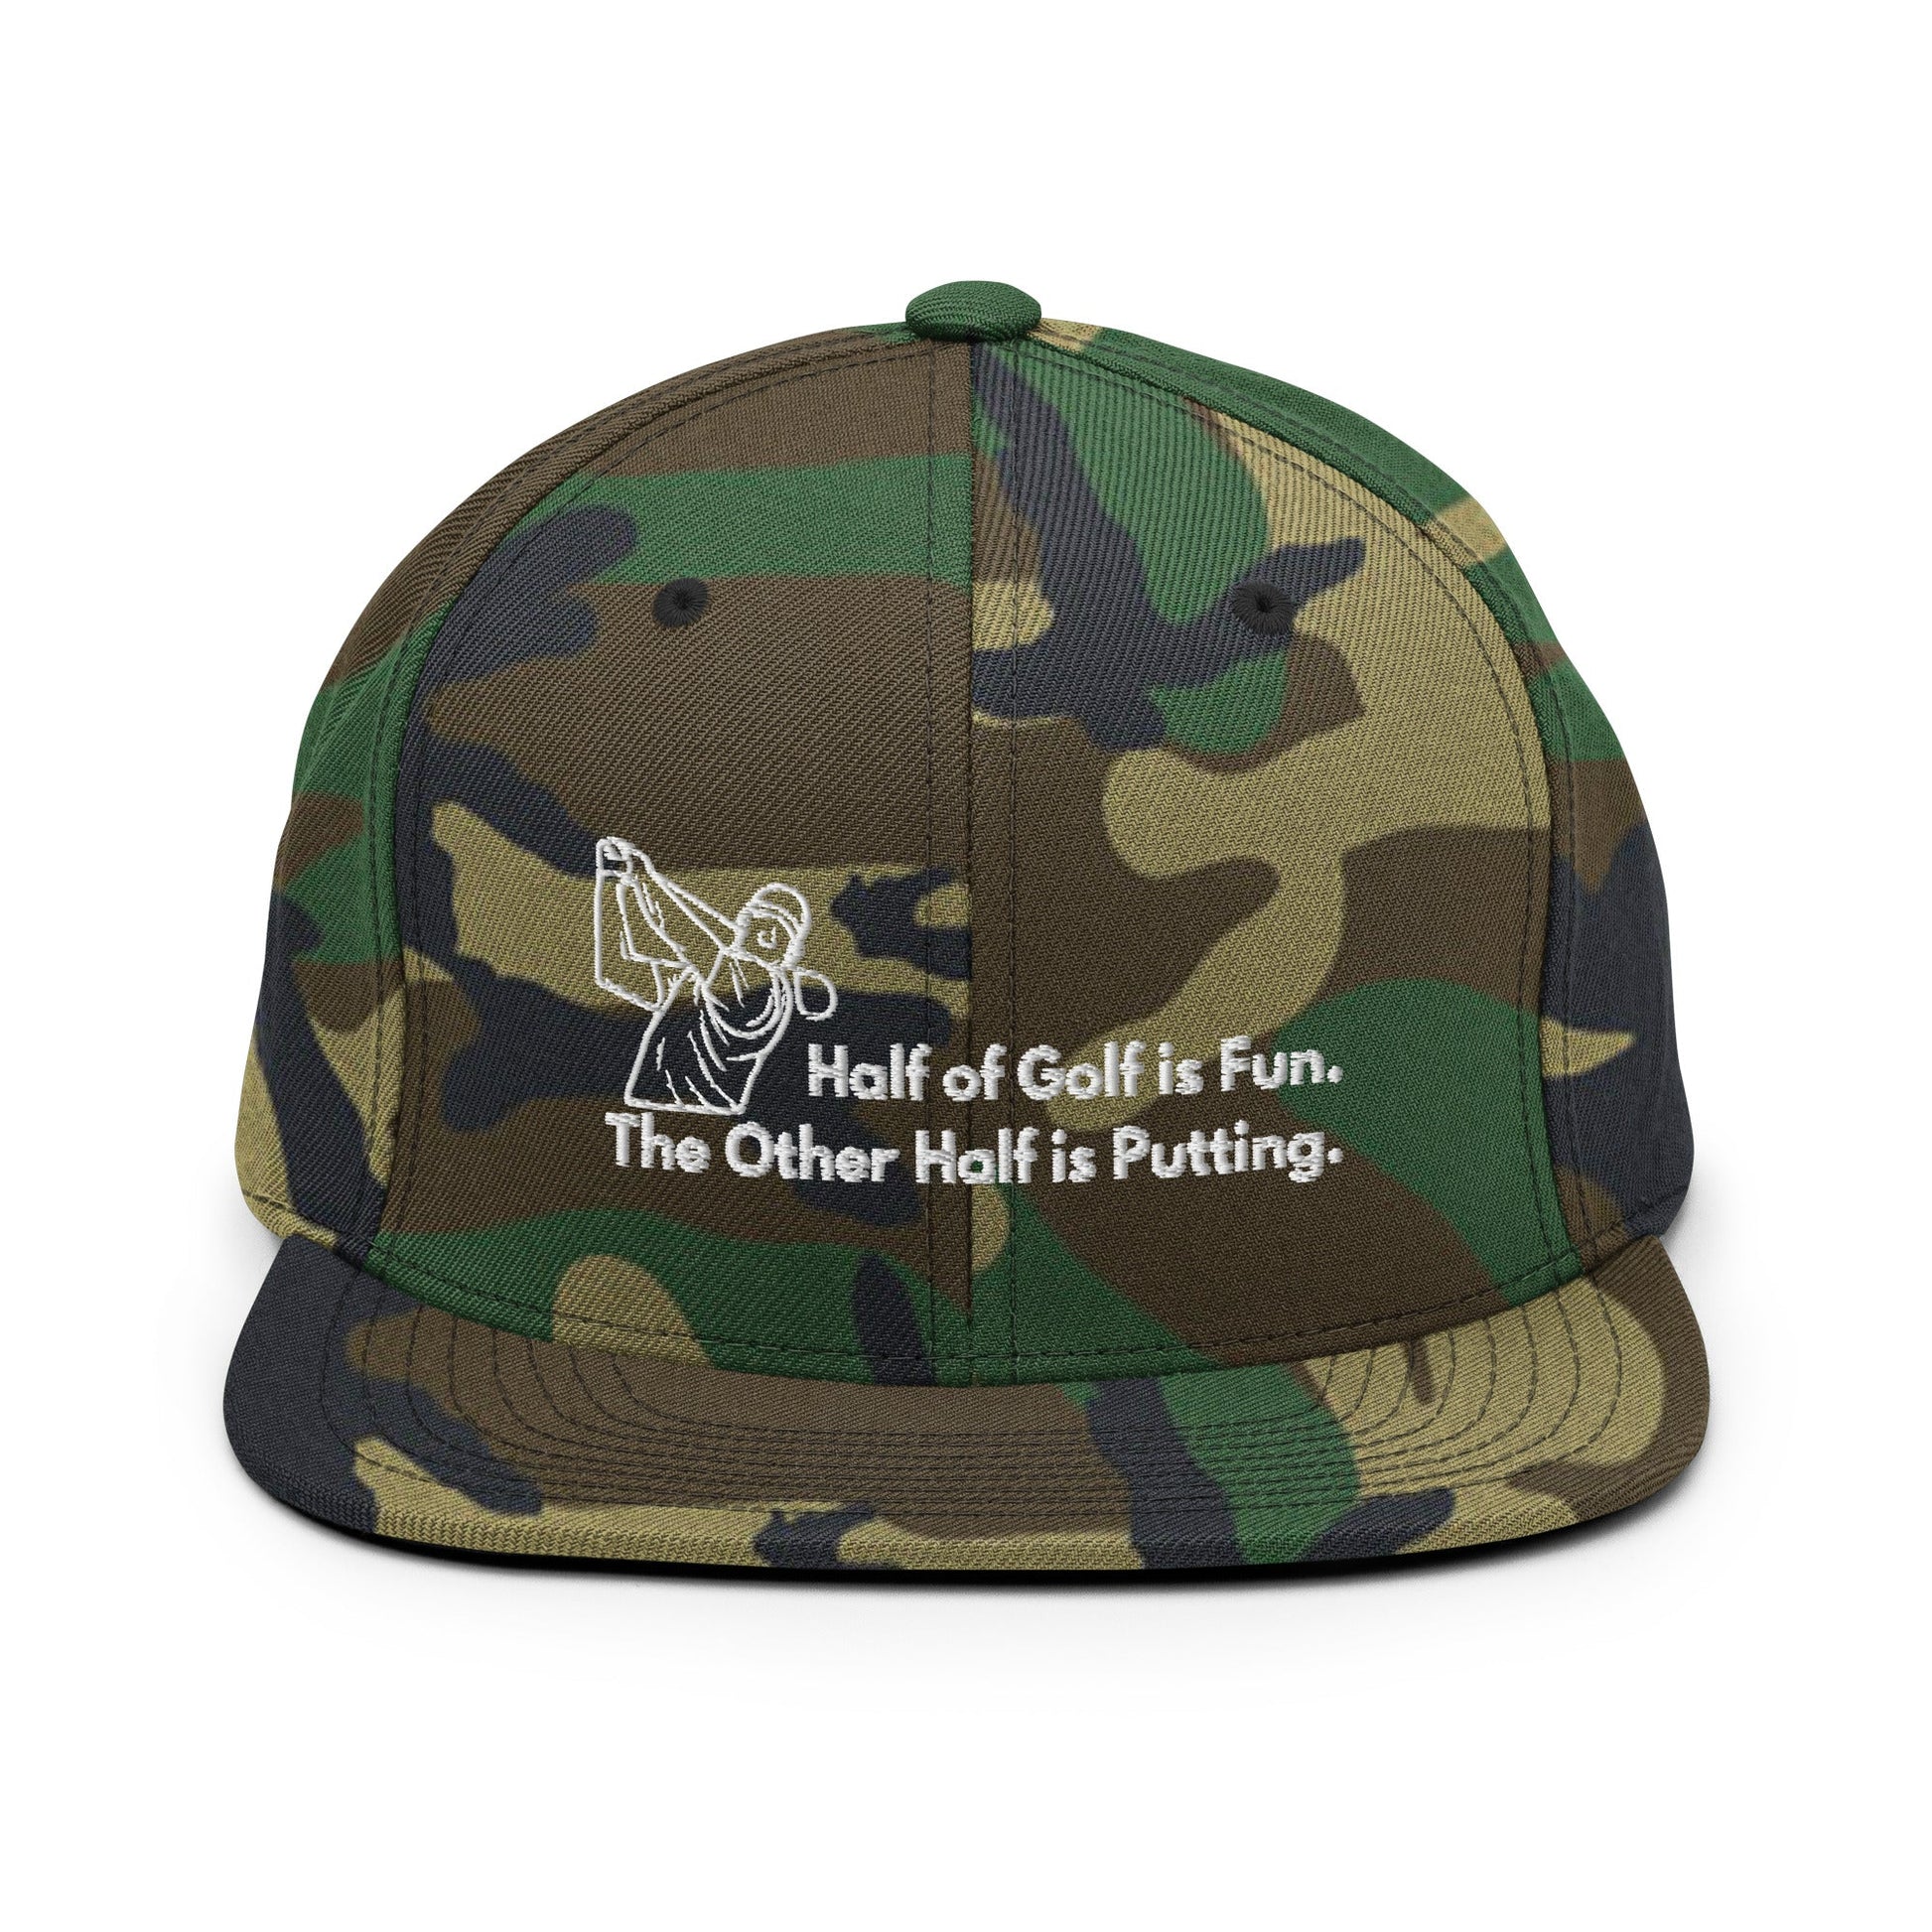 Funny Golfer Gifts  Snapback Hat Green Camo Half of Golf is Fun Snapback Hat